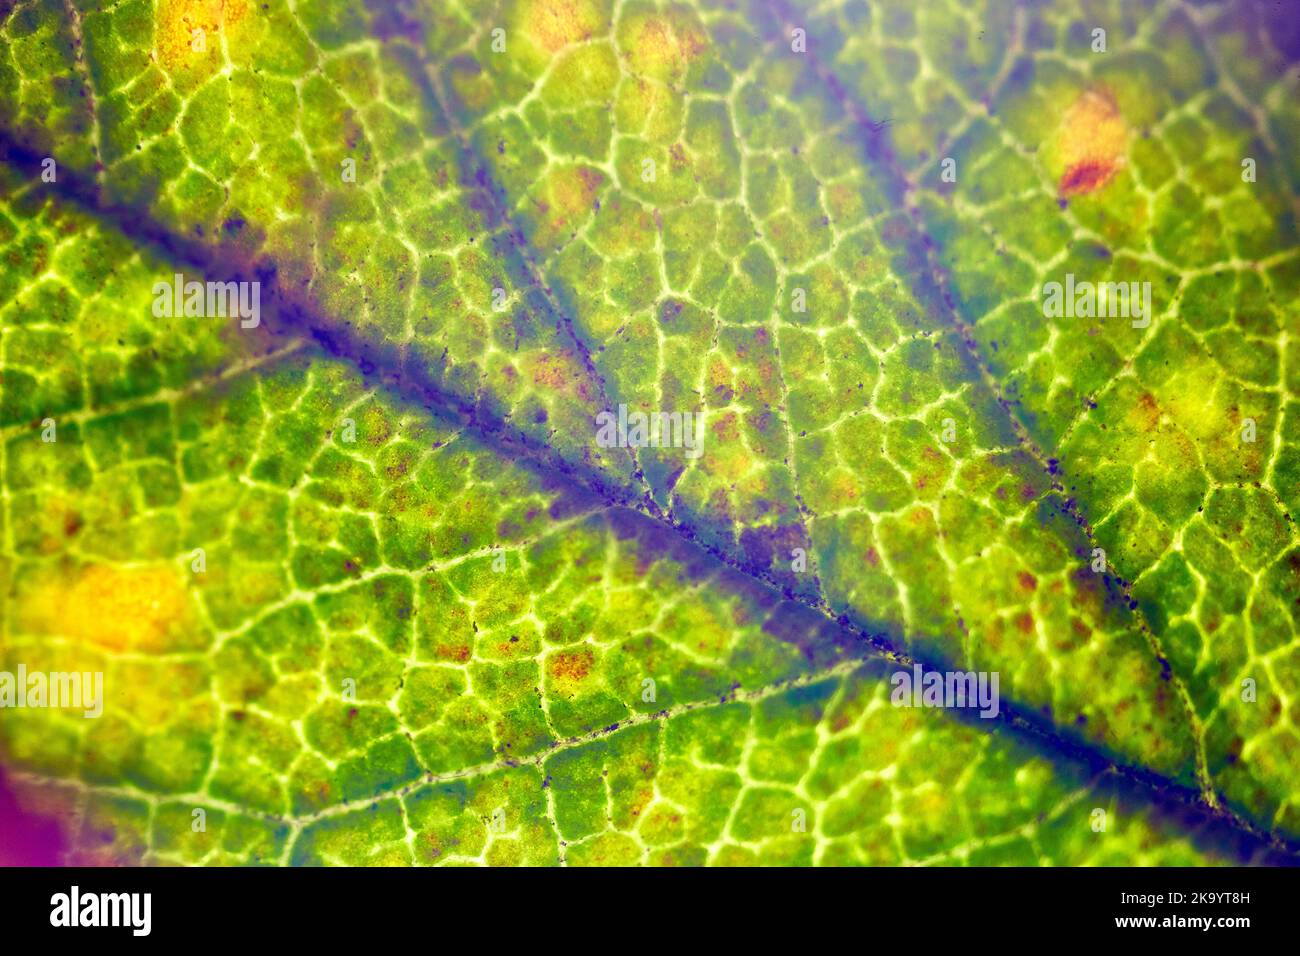 beautiful autumn leaf patterns under the microscope Stock Photo